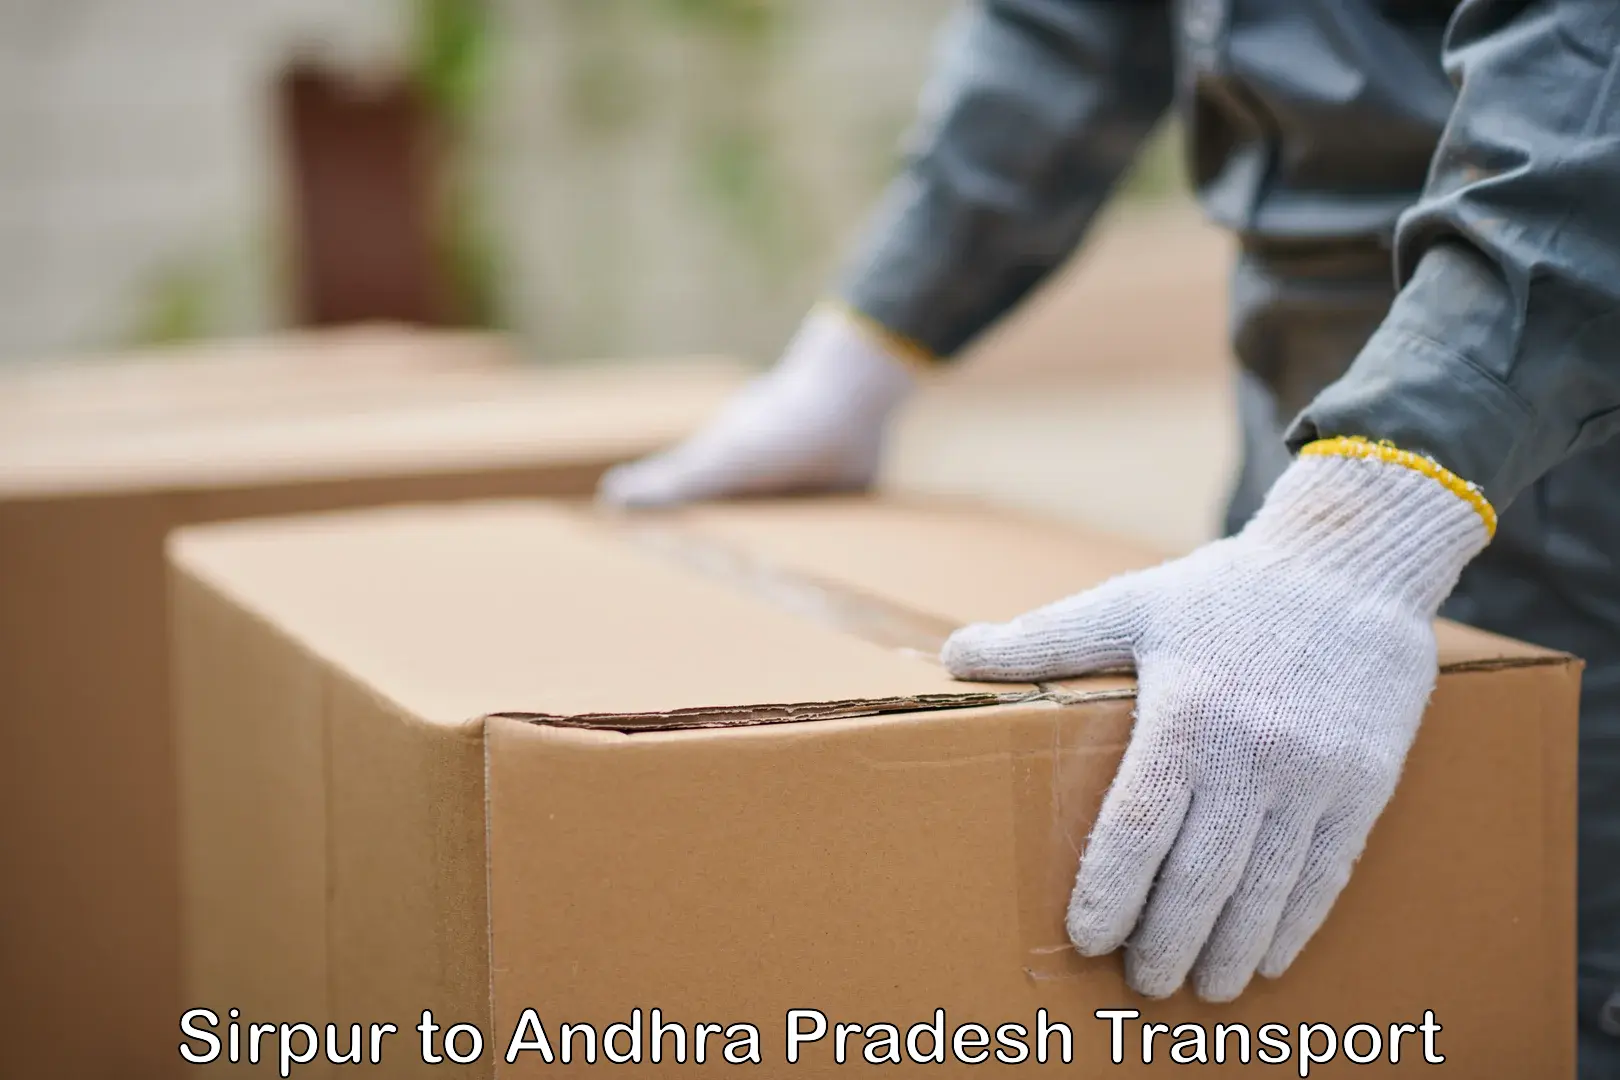 Truck transport companies in India Sirpur to Konduru